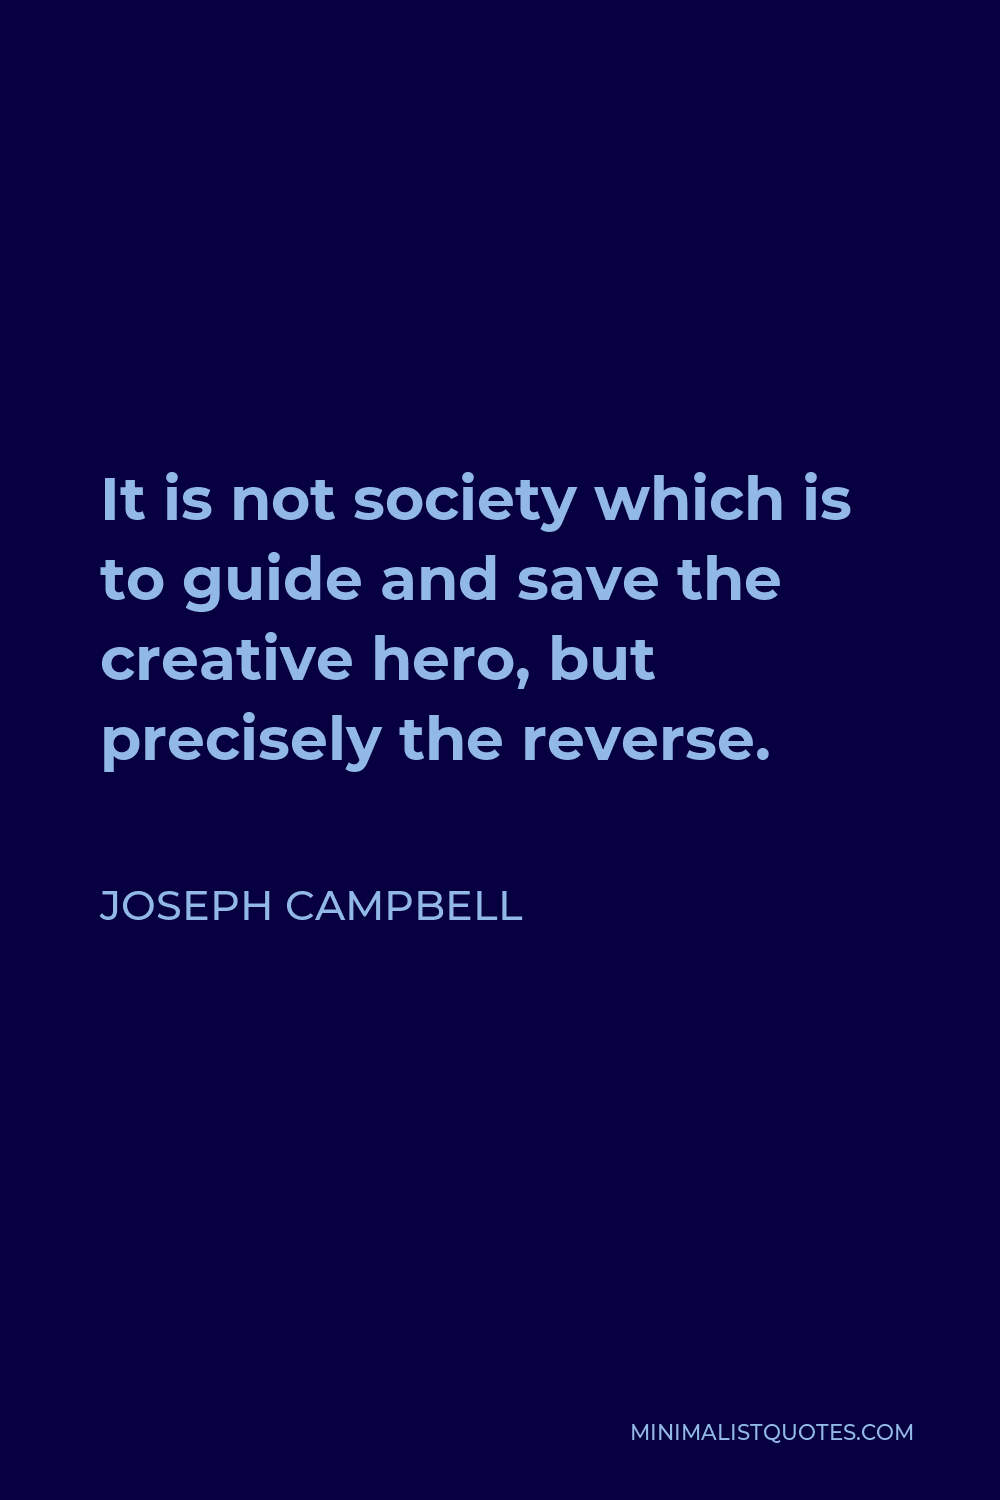 Joseph Campbell quote: Myths are public dreams; dreams are private